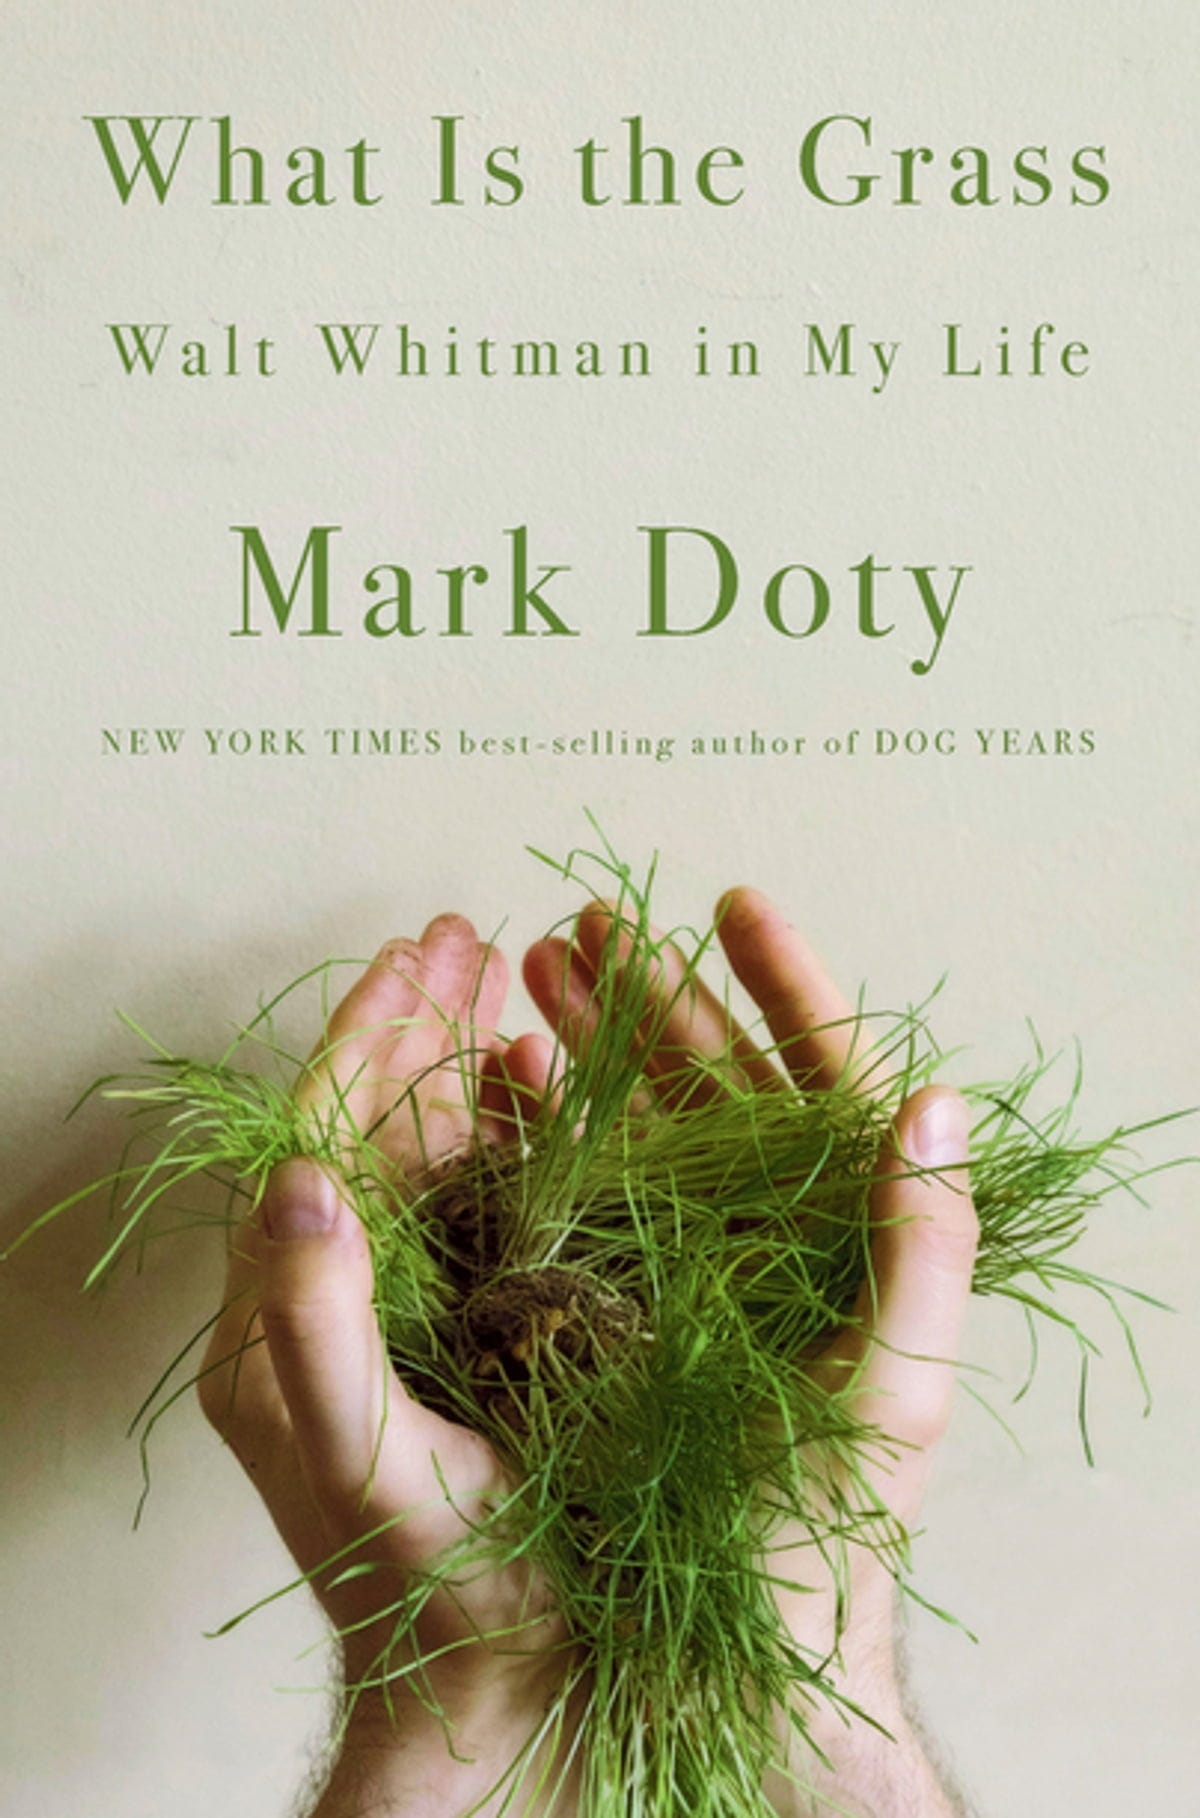 What Is the Grass: Walt Whitman in My Life eBook by Mark Doty - EPUB |  Rakuten Kobo United States